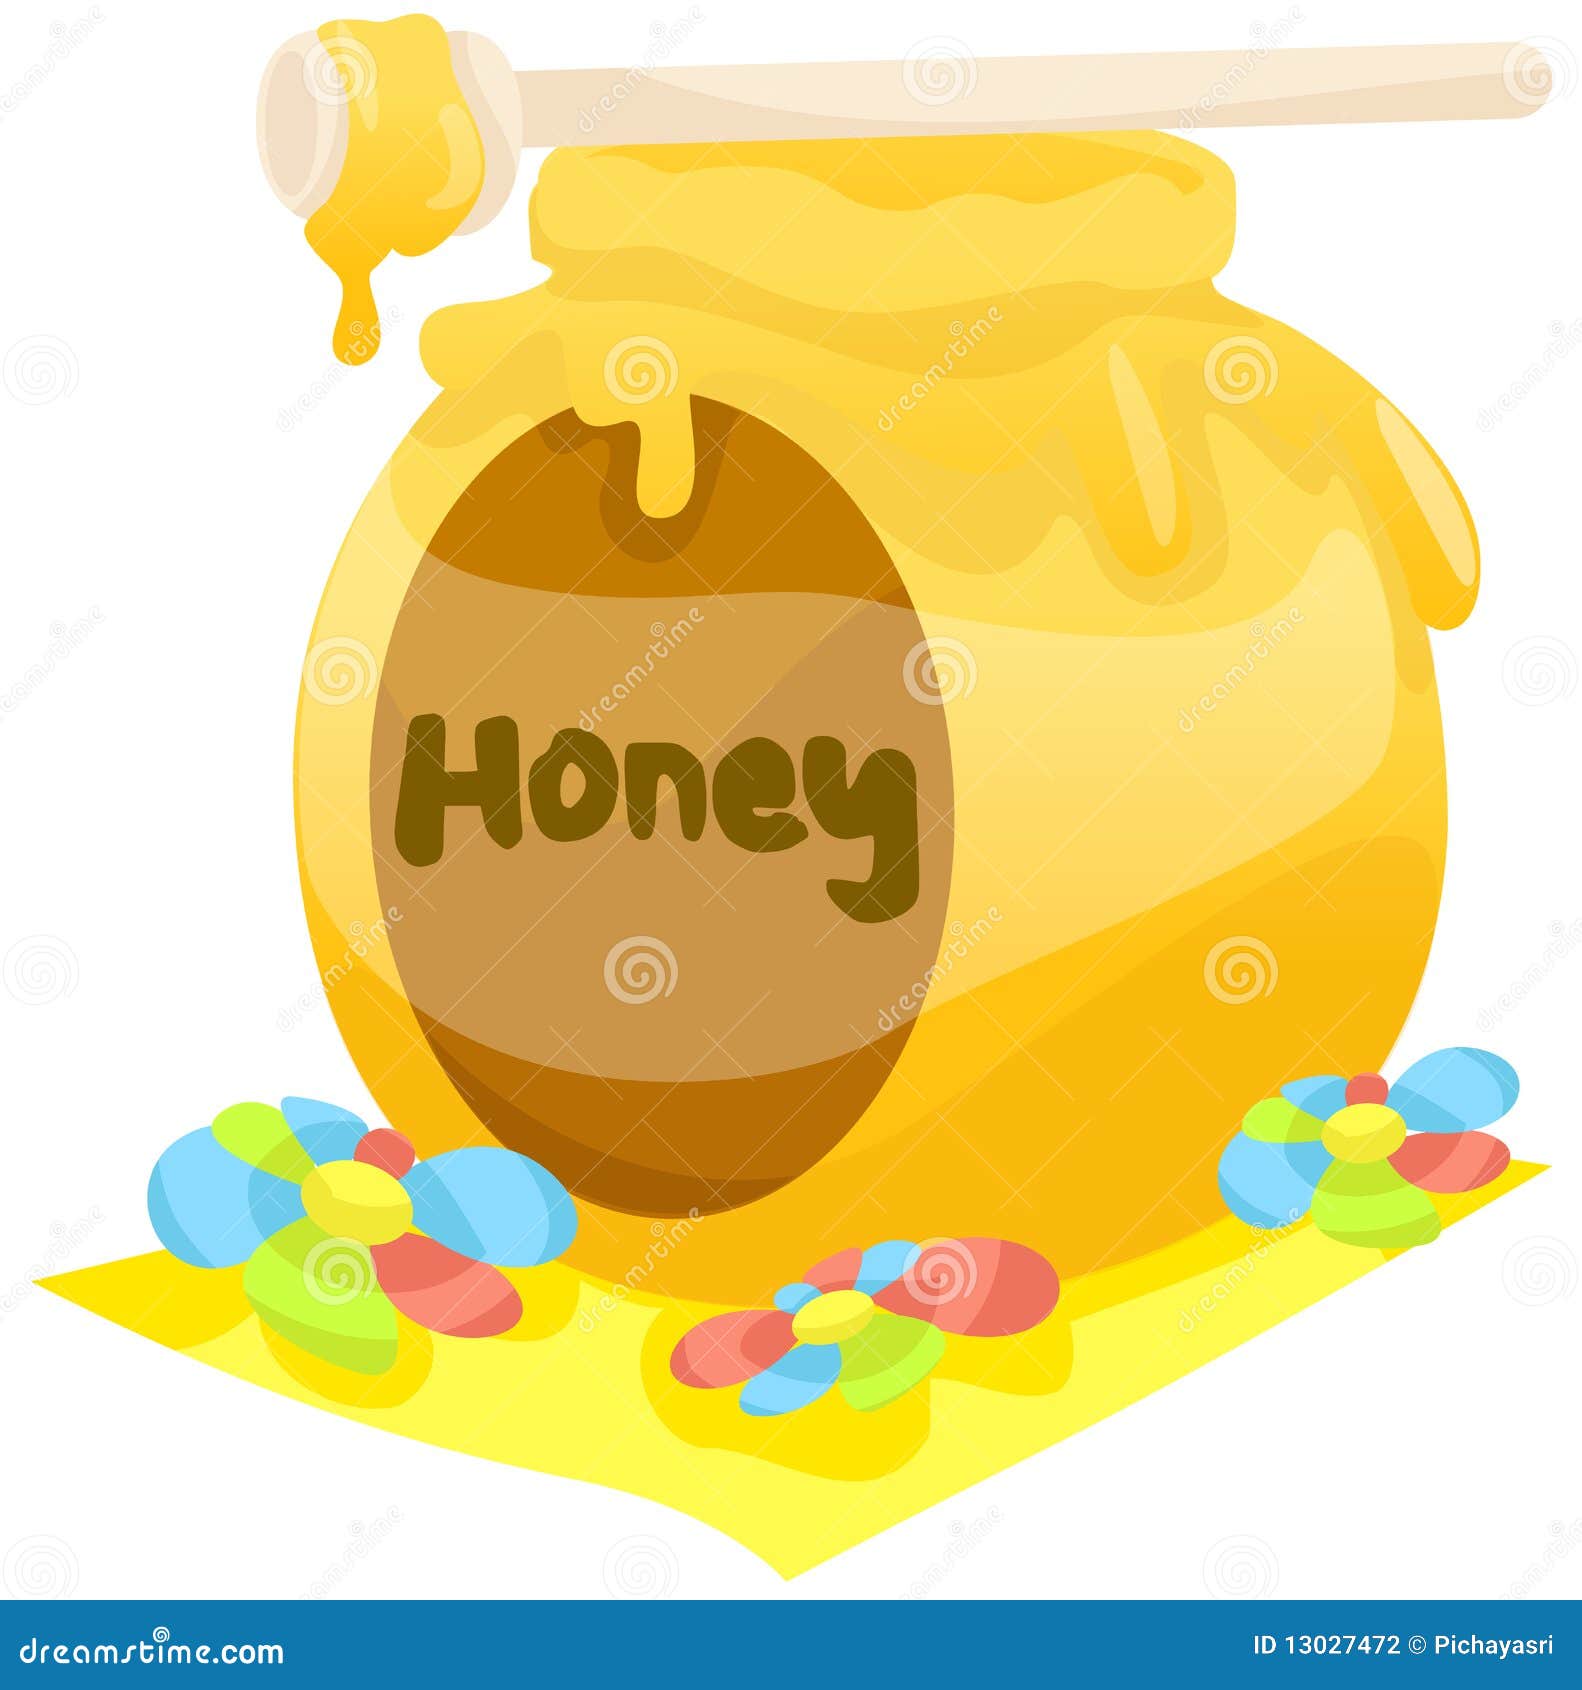 honey jar clipart - photo #36